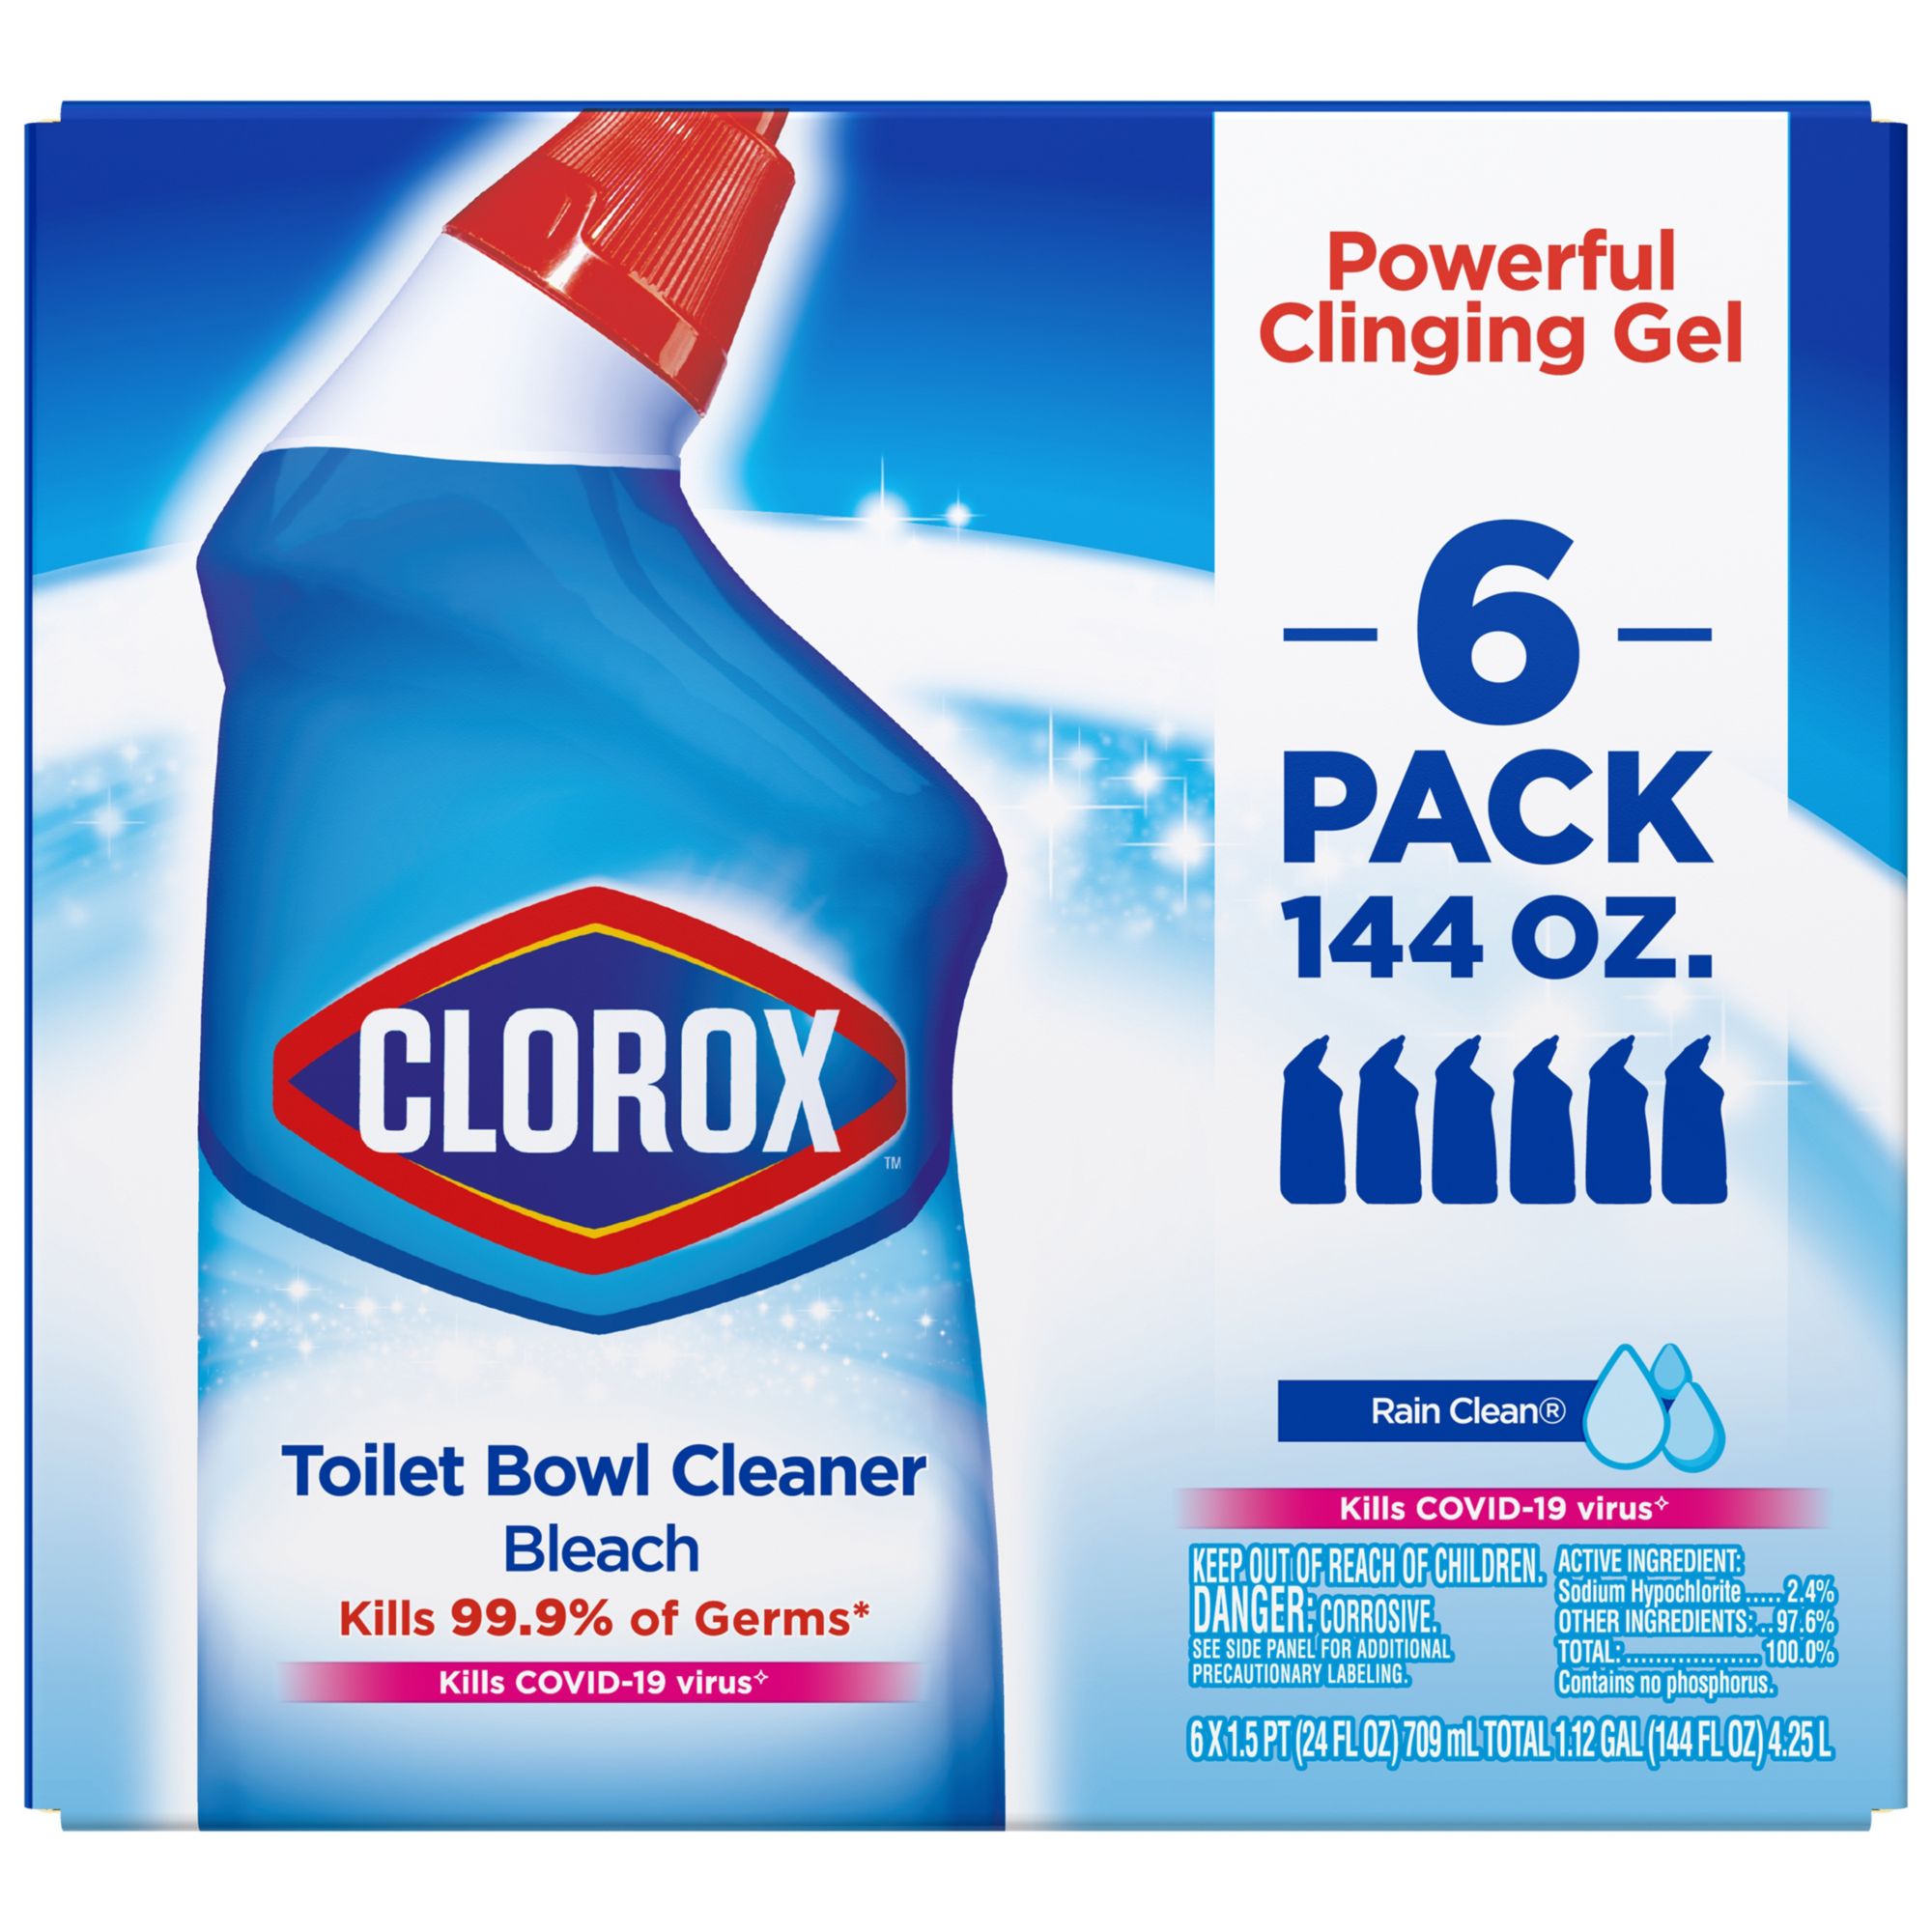 Clorox Disinfecting Cleaner, Bathroom, Original - 30 fl oz